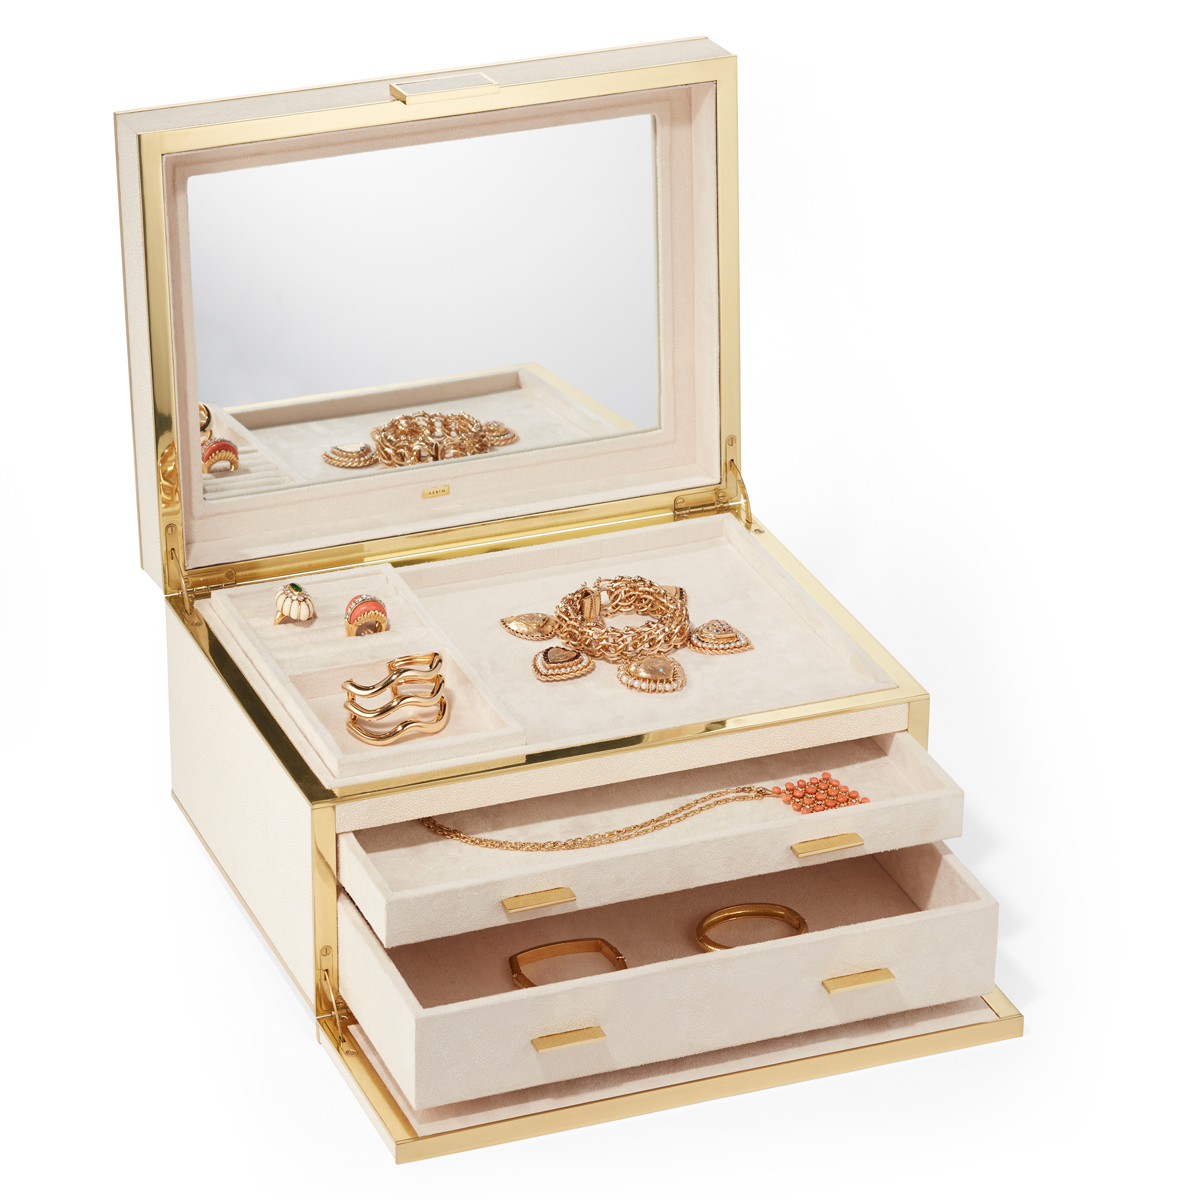 Aerin Luxe Shagreen Jewelry Box, Cream